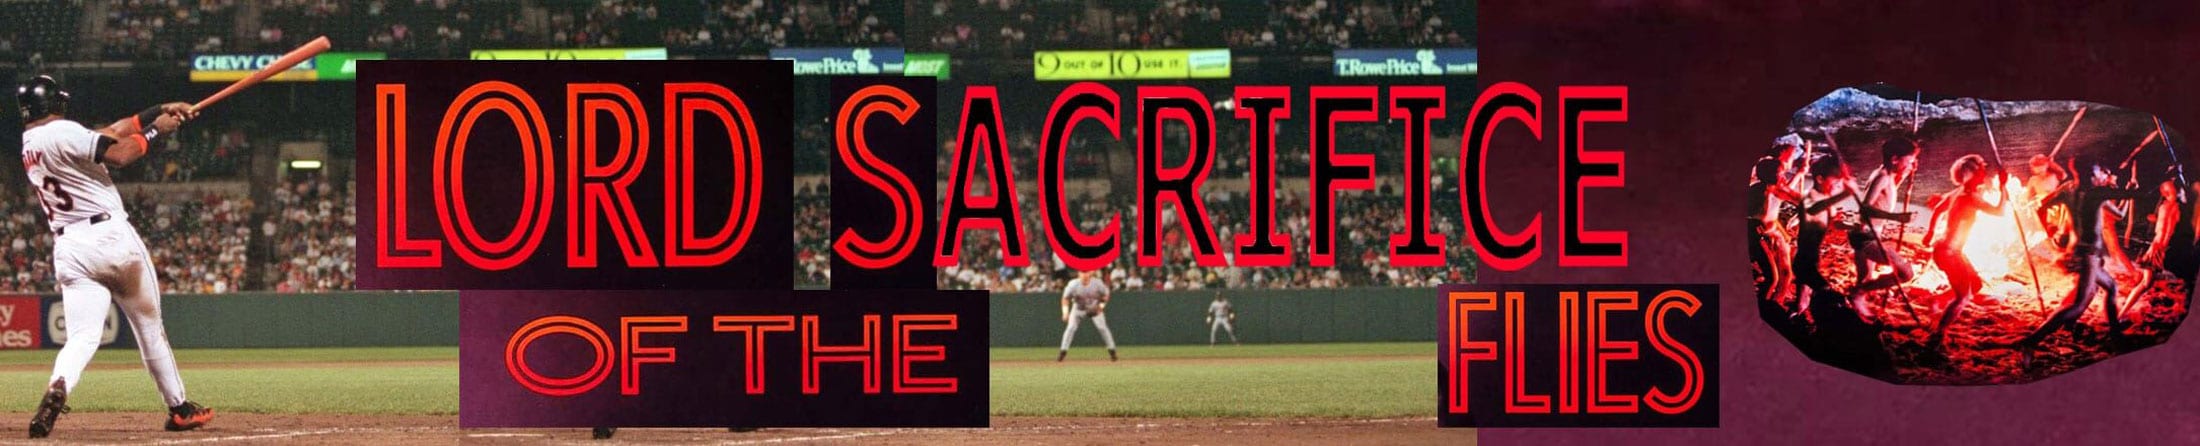 Lord of the Sacrifice Flies, baseball movie